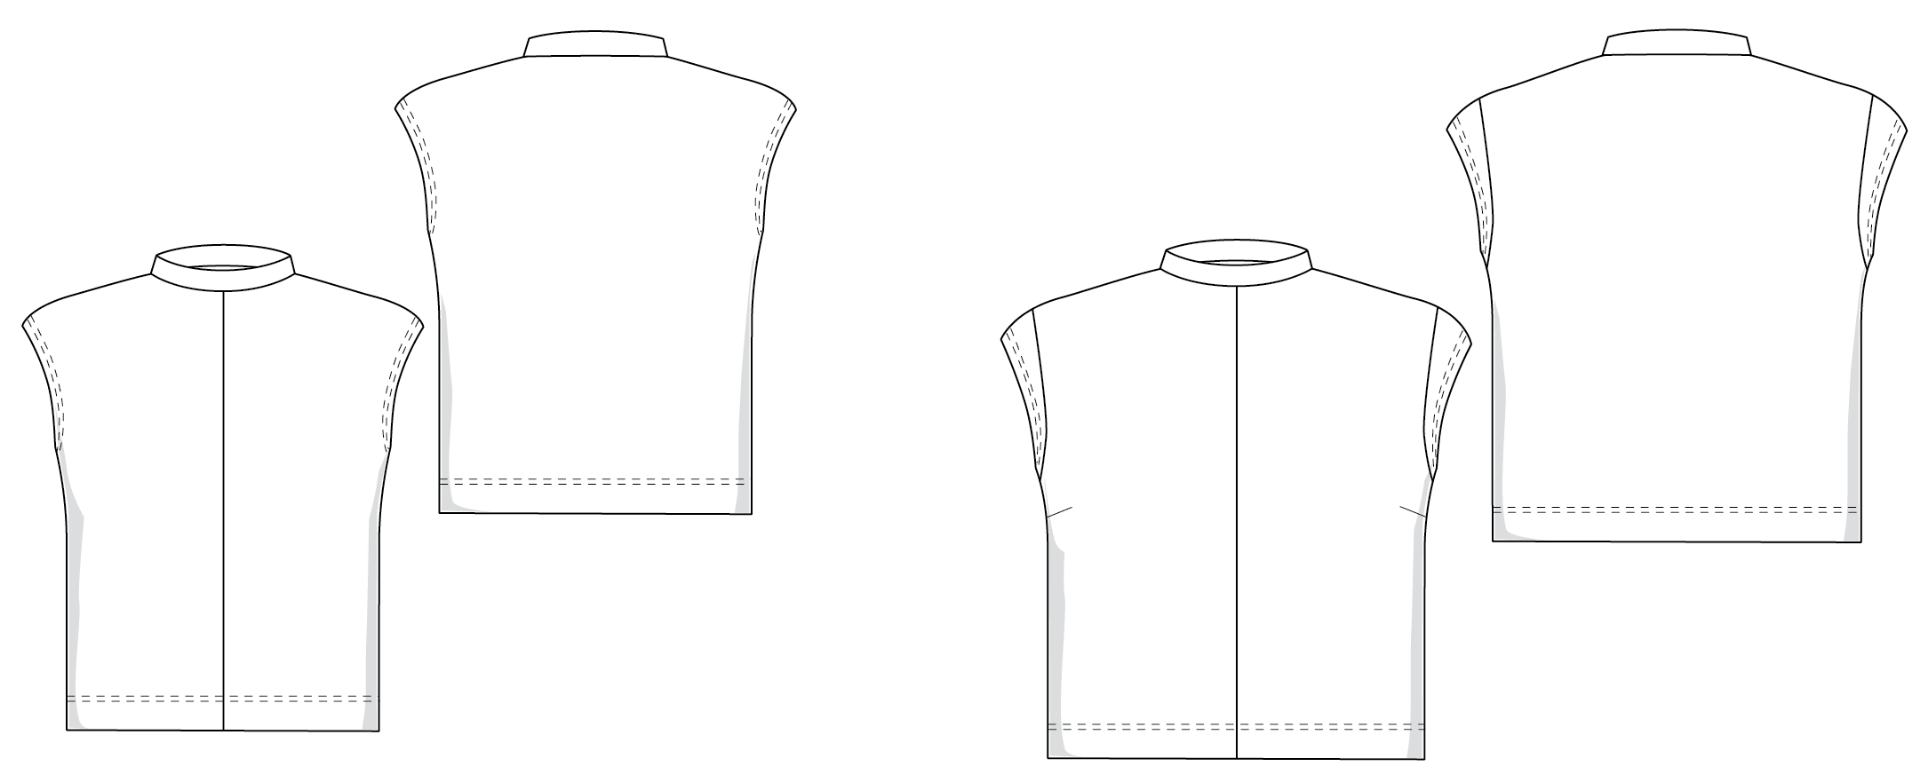 Technical drawing overcut shirt